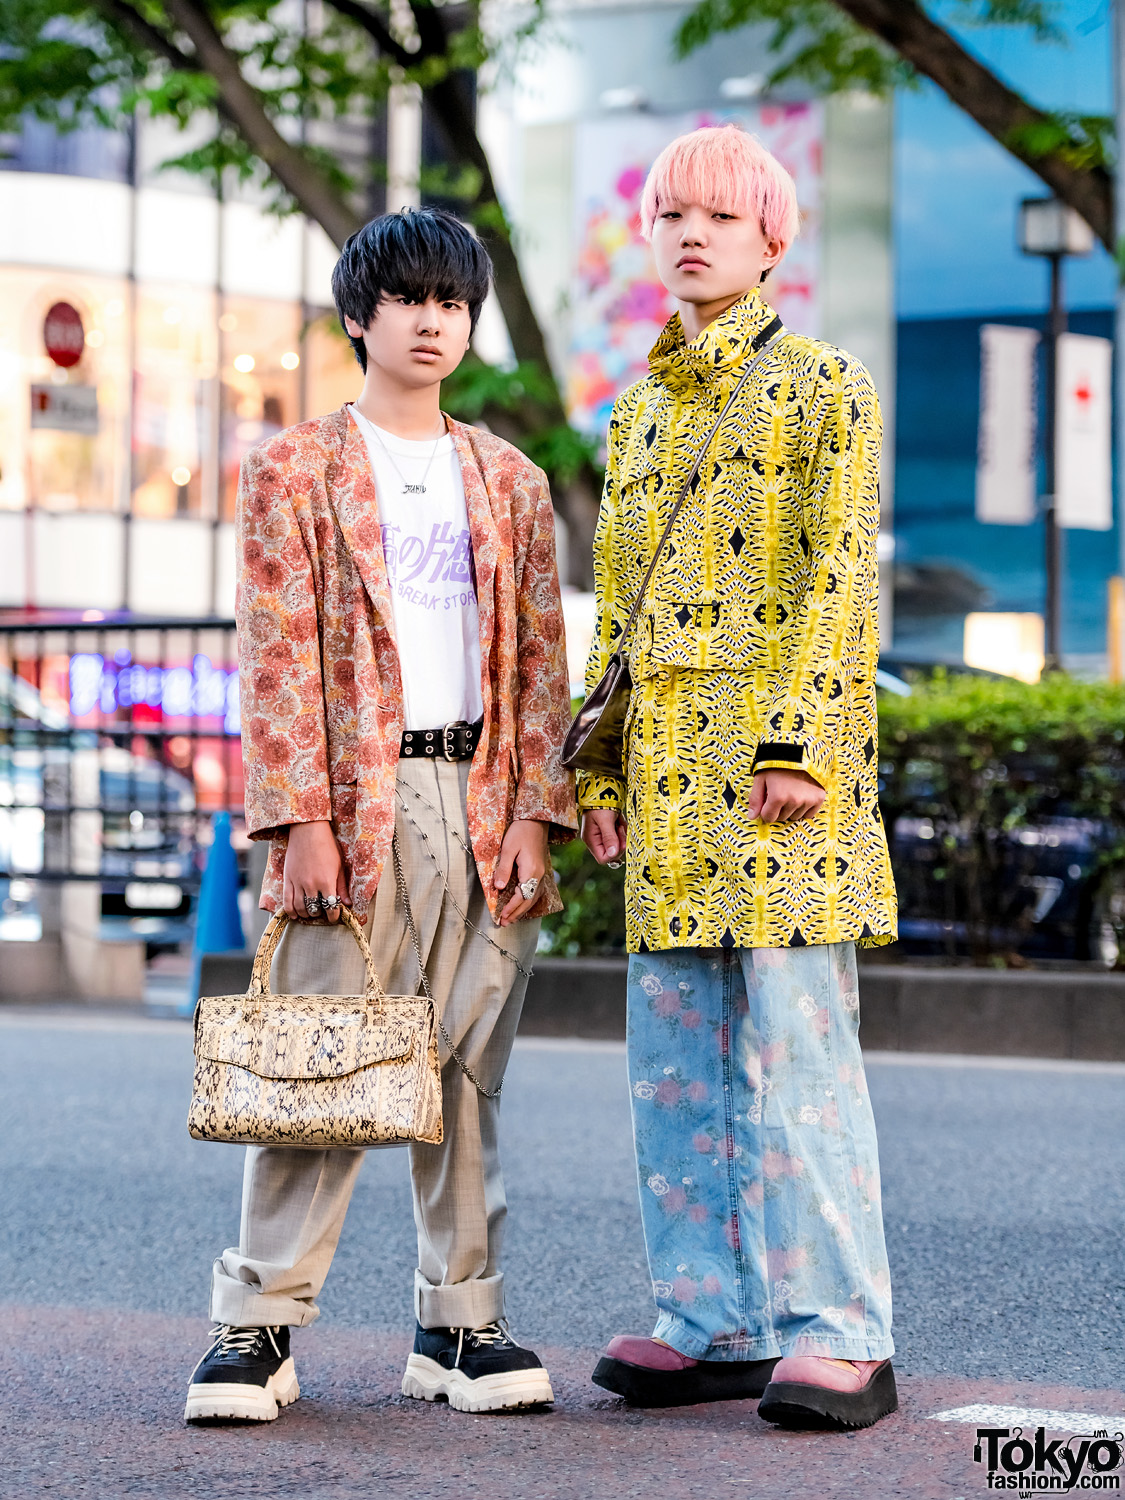 Japanese Mixed Prints Streetwear w/ Valentino, Nincompoop Capacity, Oh Pearl, Eytys, Kinji, Dissborn & DHL